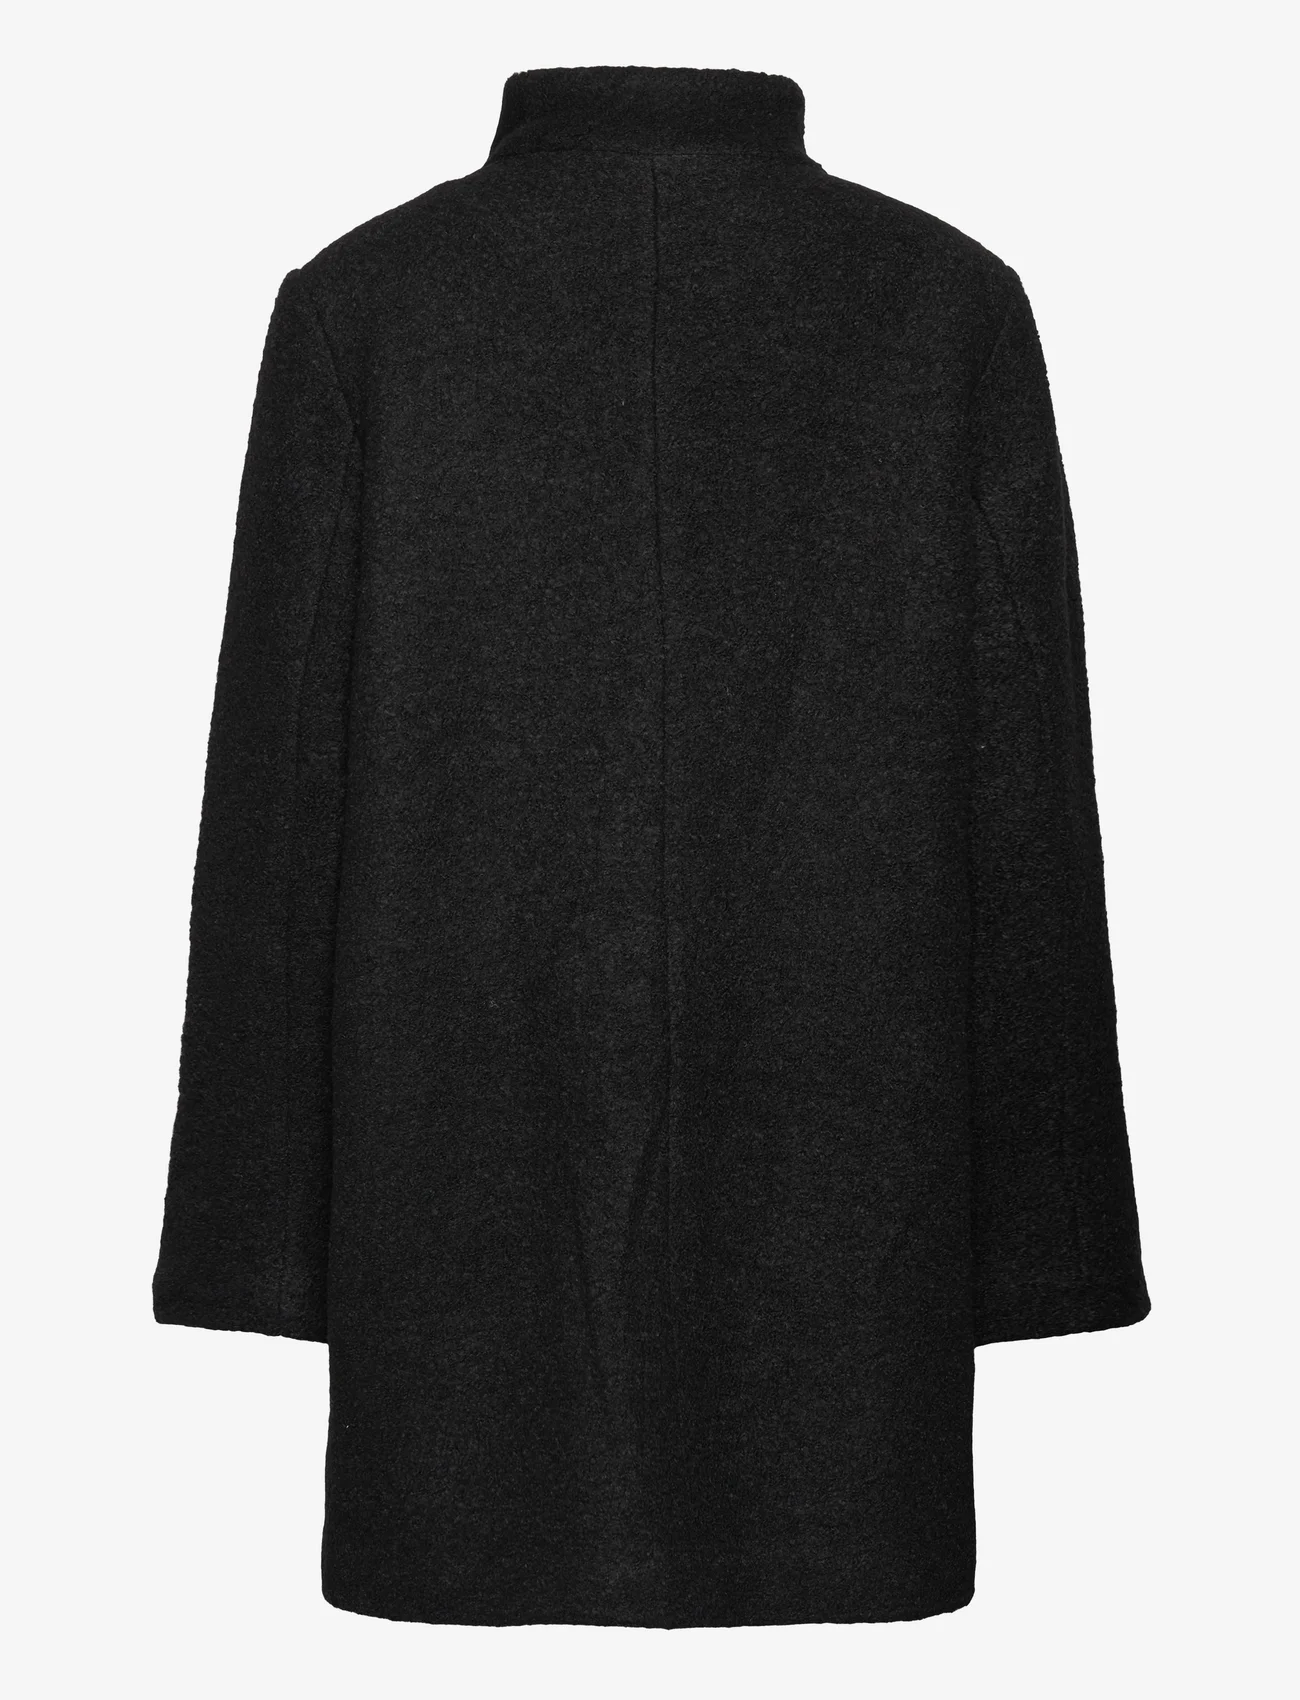 Brandtex - Coat Outerwear Light - vinterjackor - black - 1